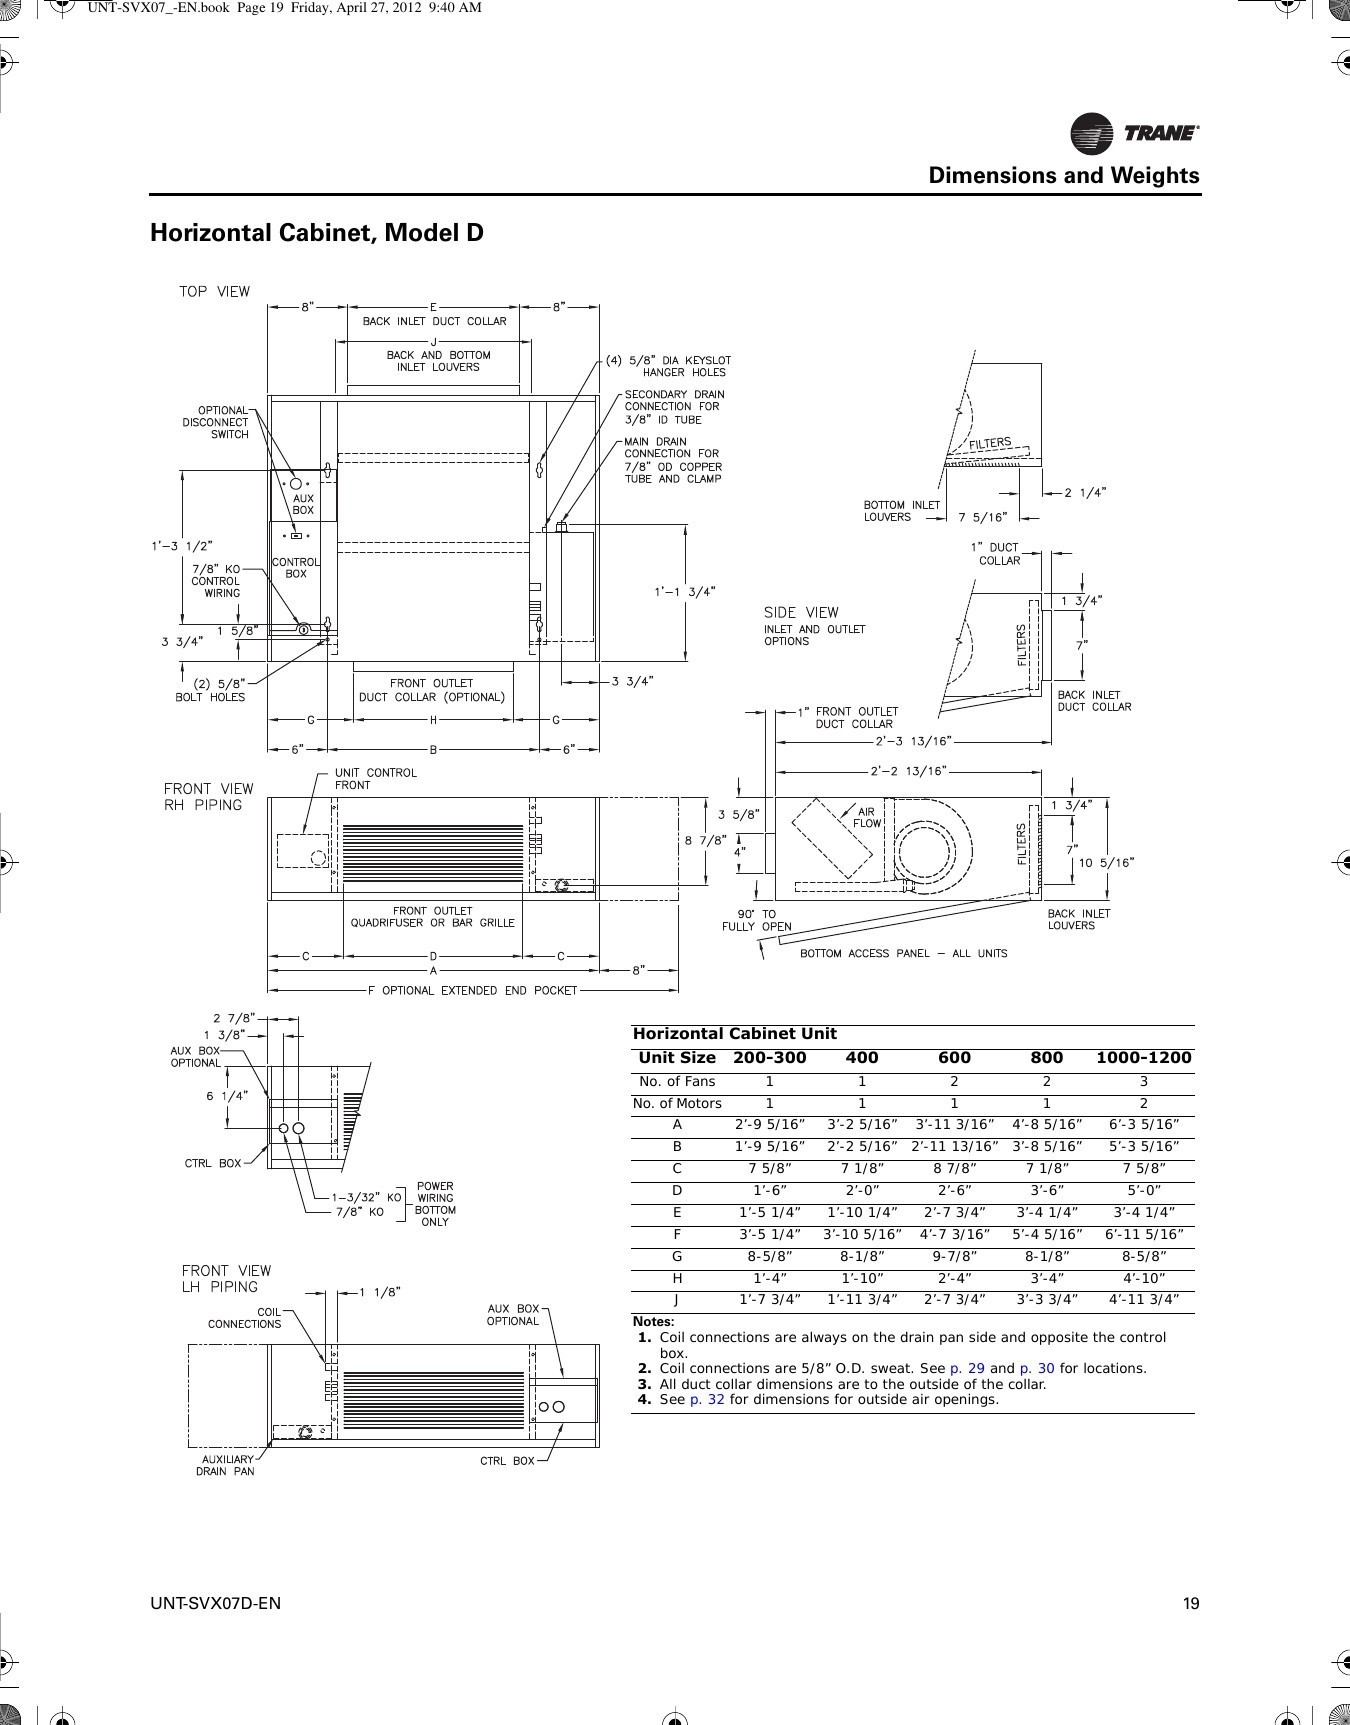 wiring diagram split system heat pump fresh airtemp heat pump wiring rh yourproducthere co Fuel System Wiring Diagram Electric Fuel Pump Wiring Diagram